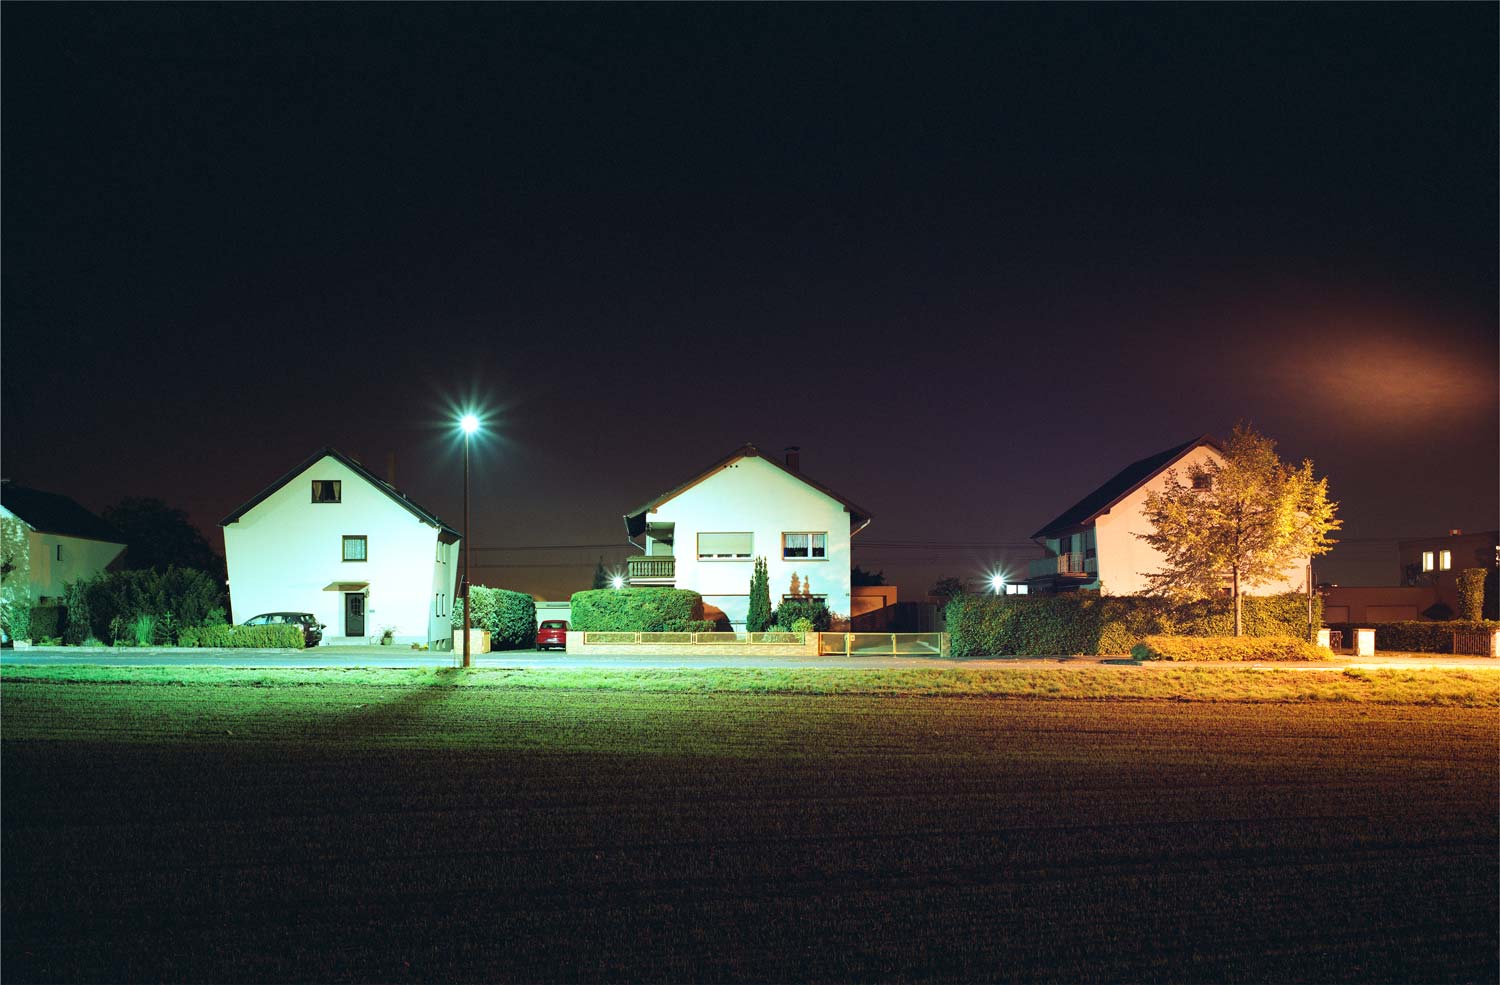 foto: manfred bogner, berlin, bei licht betrachtet